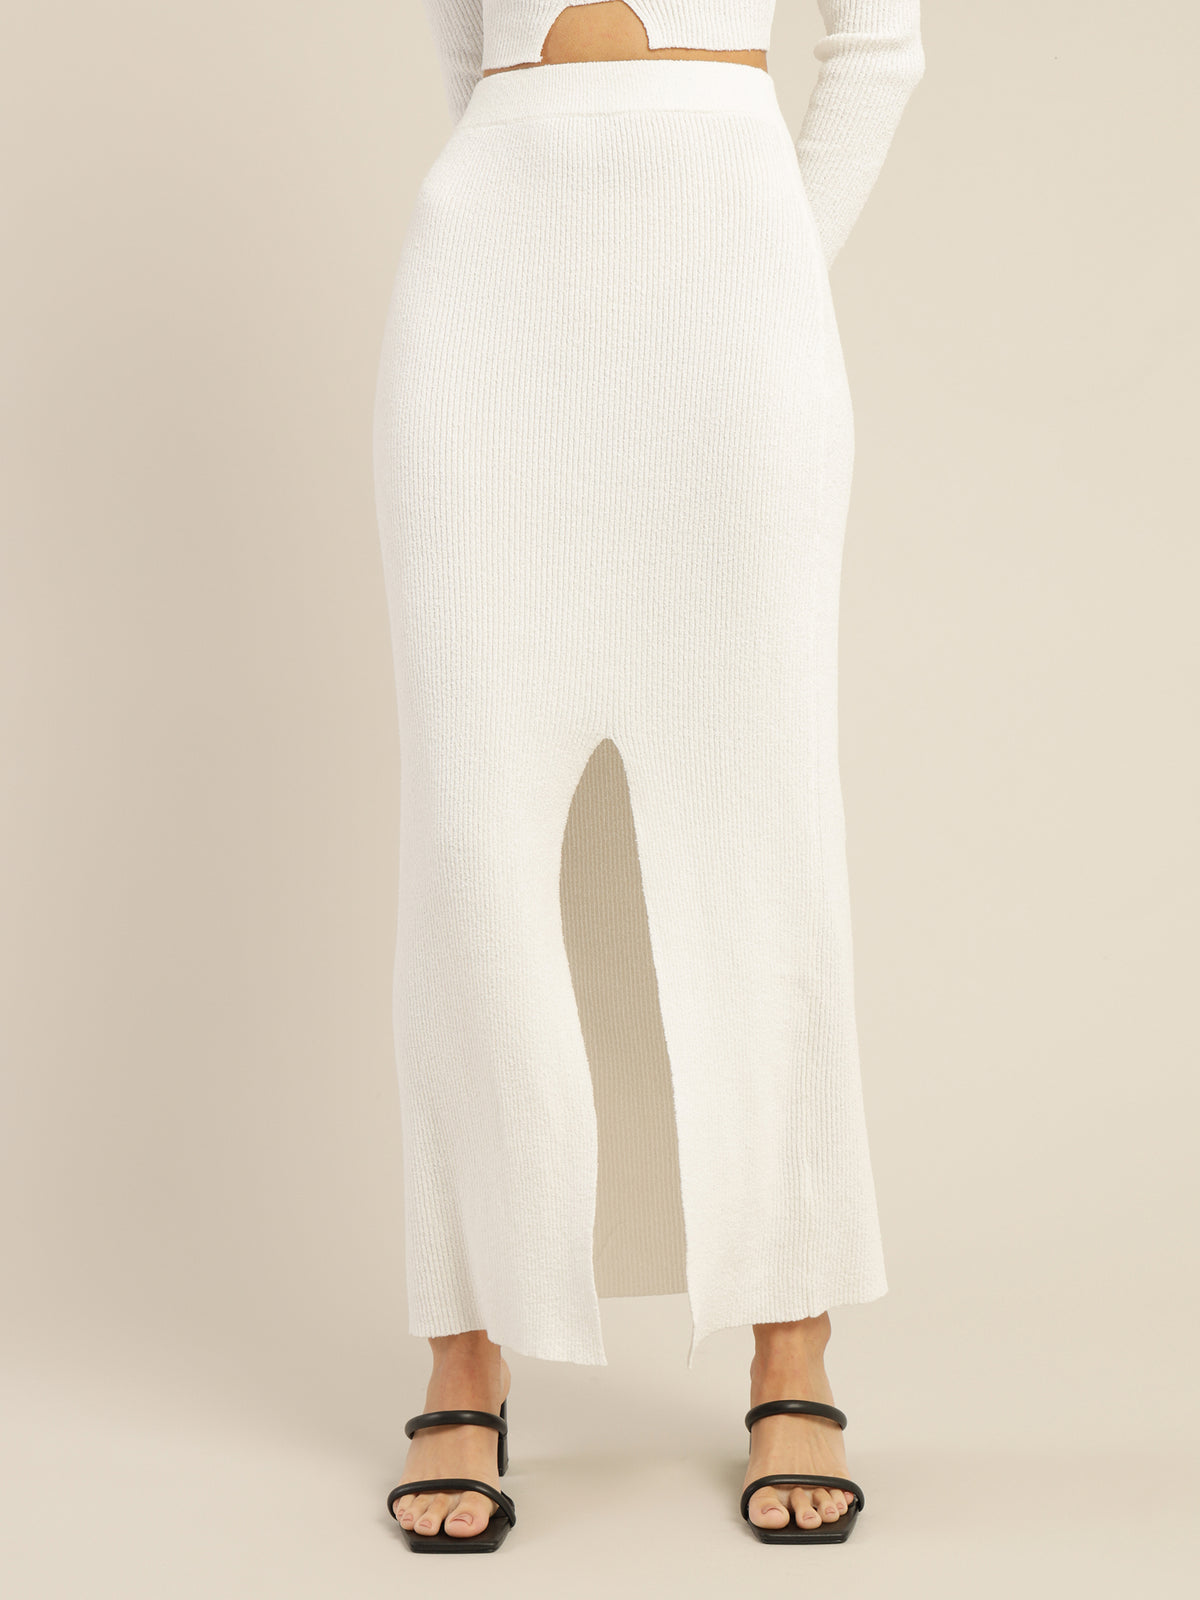 Ivy Knit Skirt in Ivory White